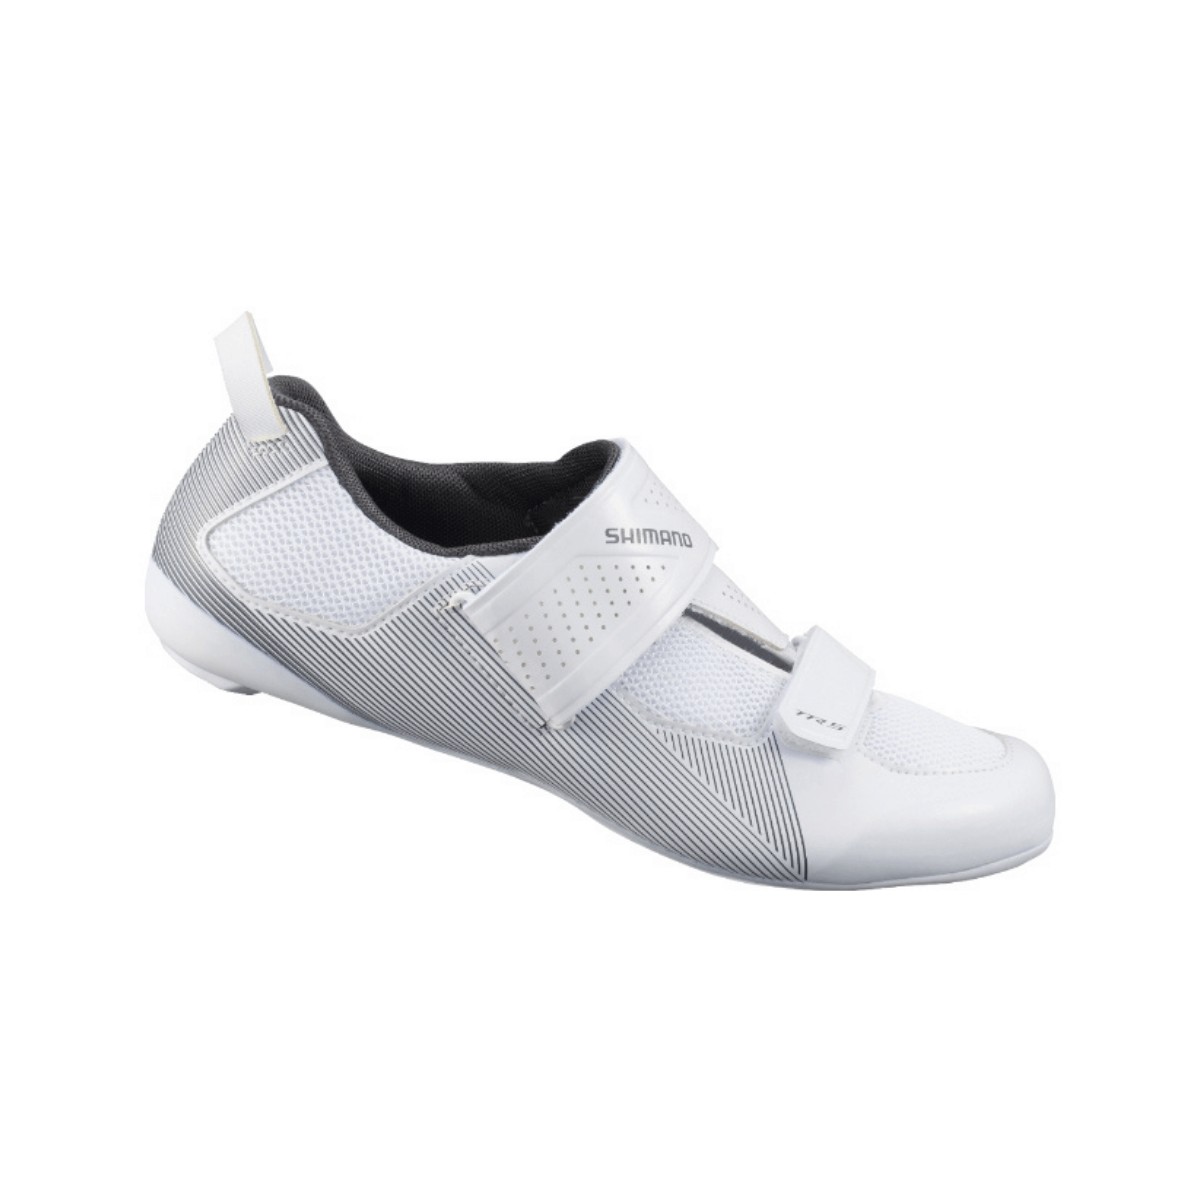 Shimano TR501 White Shoes, Size 38 - EUR